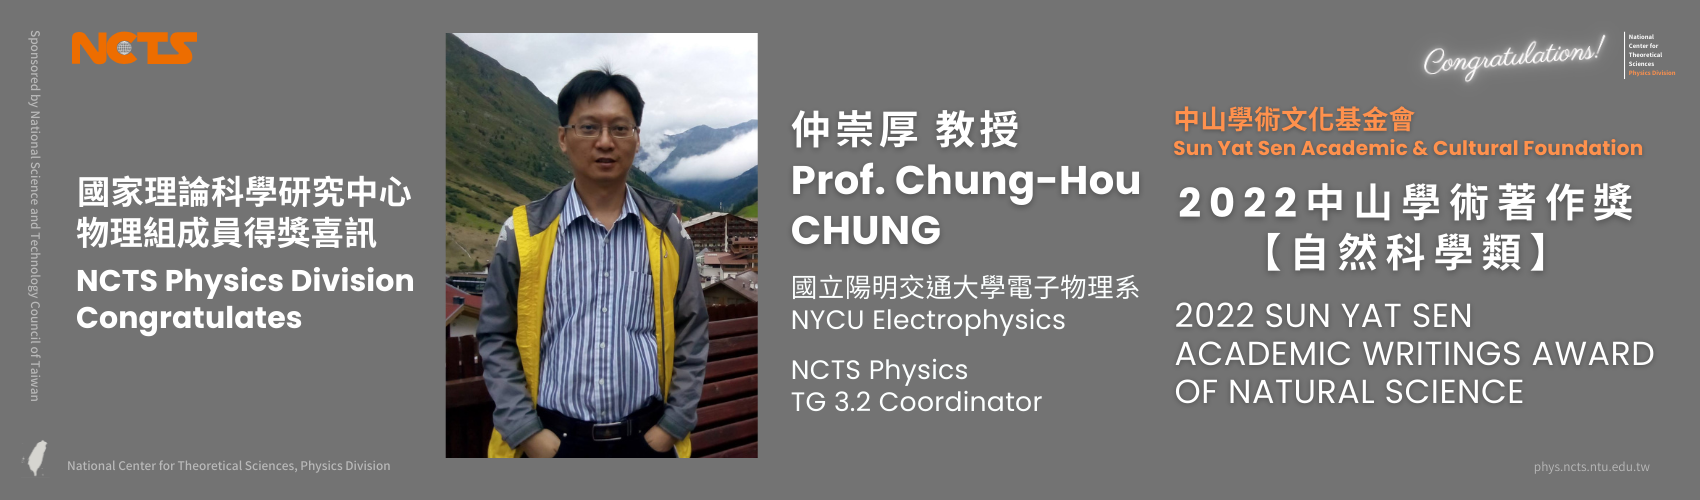 NCTS Congratulates Prof. Chung-Hou Chung on Winning 2022 Sun Yat Sen Academic Writings Award of Natural Science